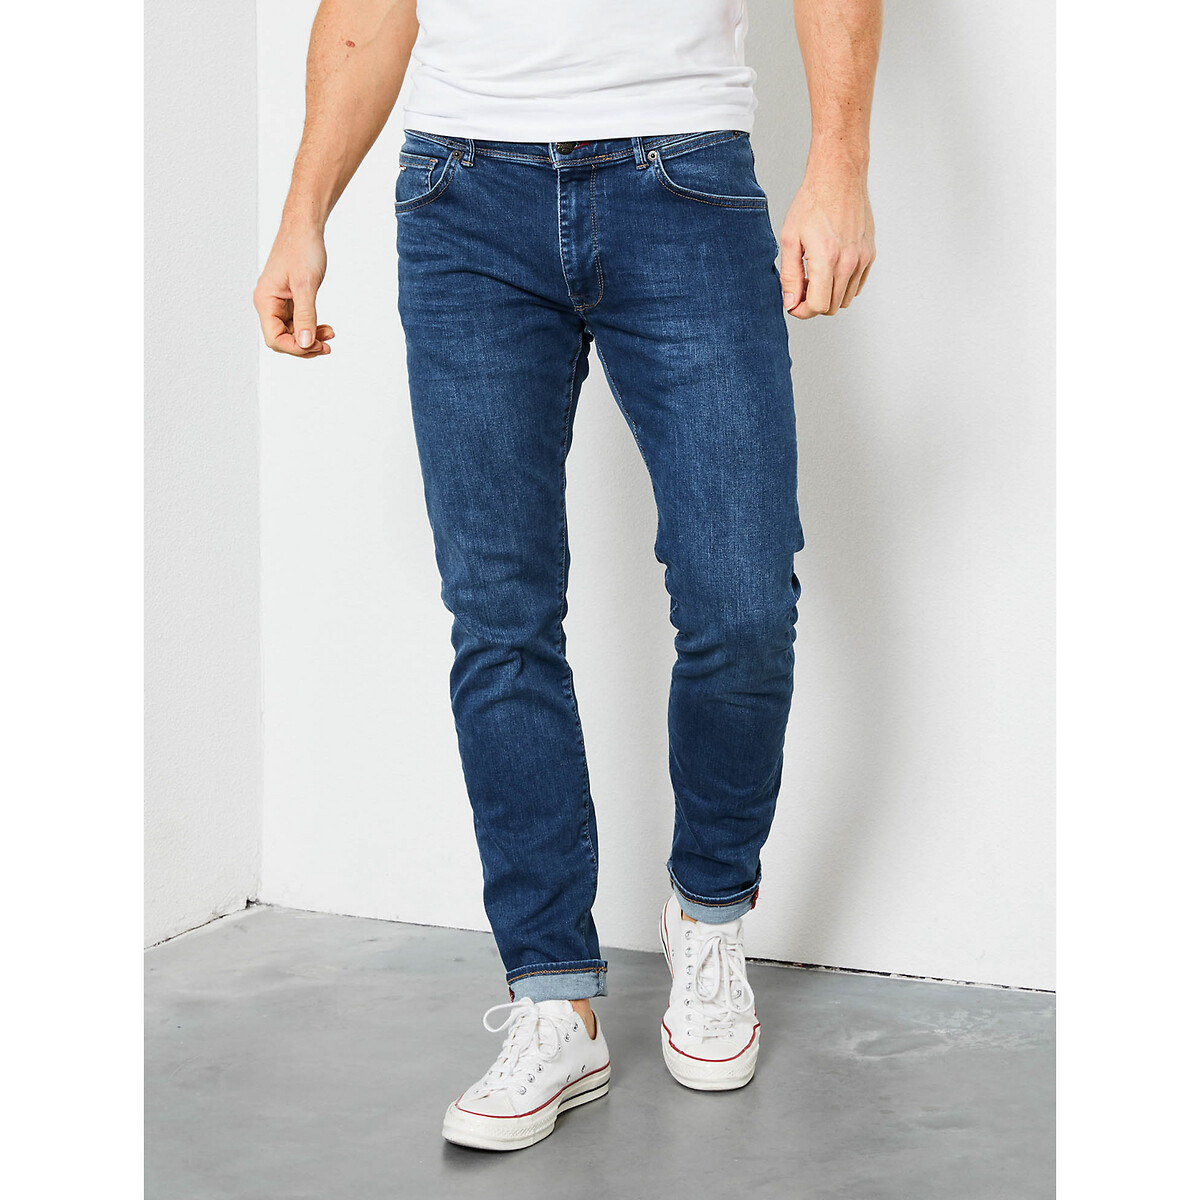 Supreme Stretch Seaham Jeans in Slim Fit